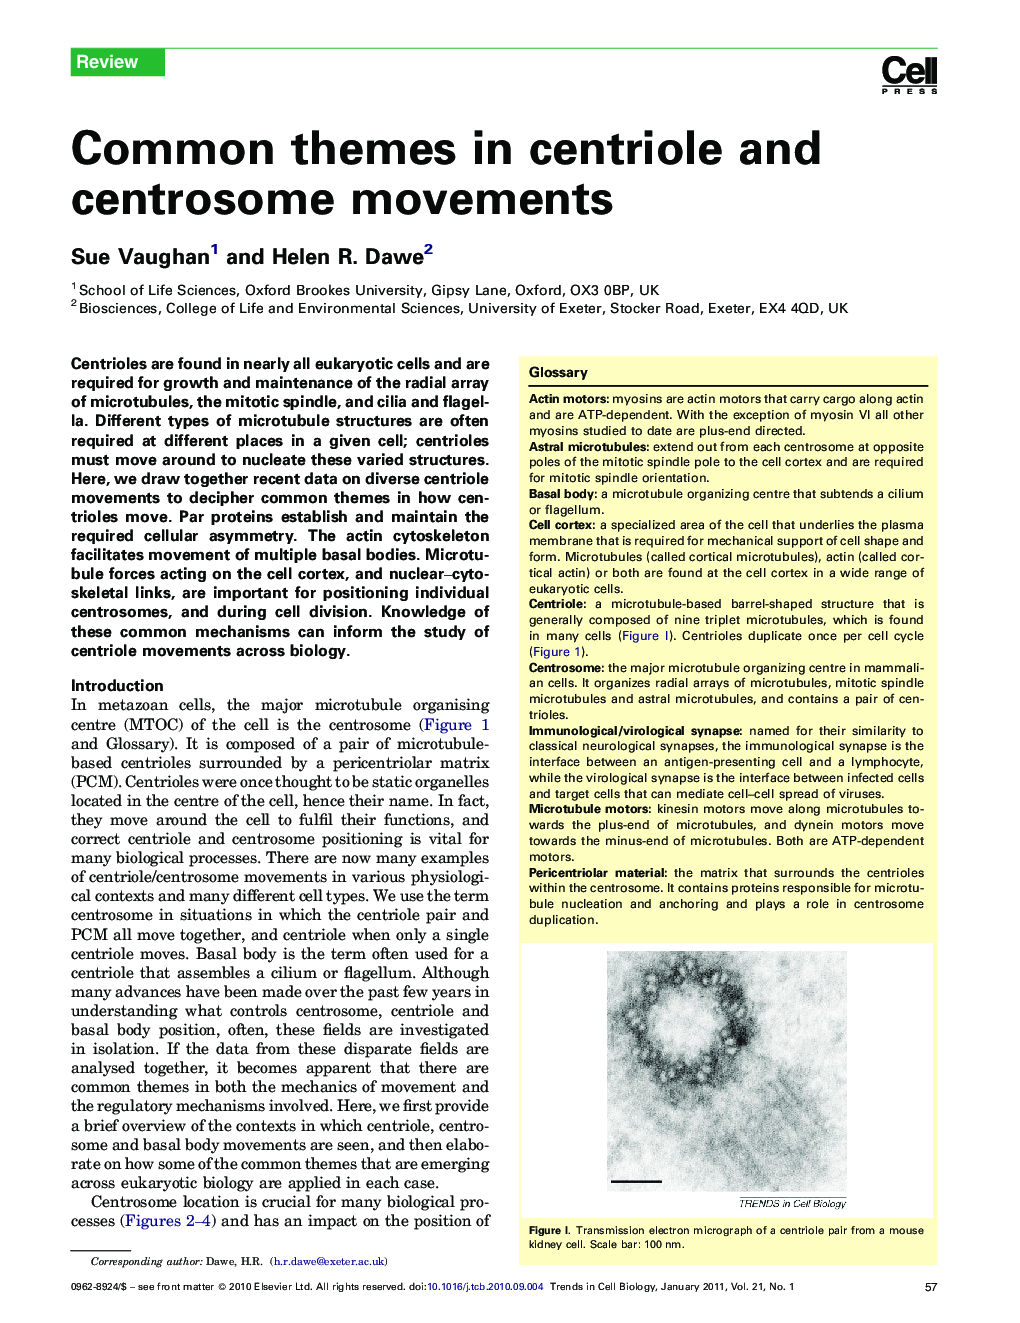 Common themes in centriole and centrosome movements